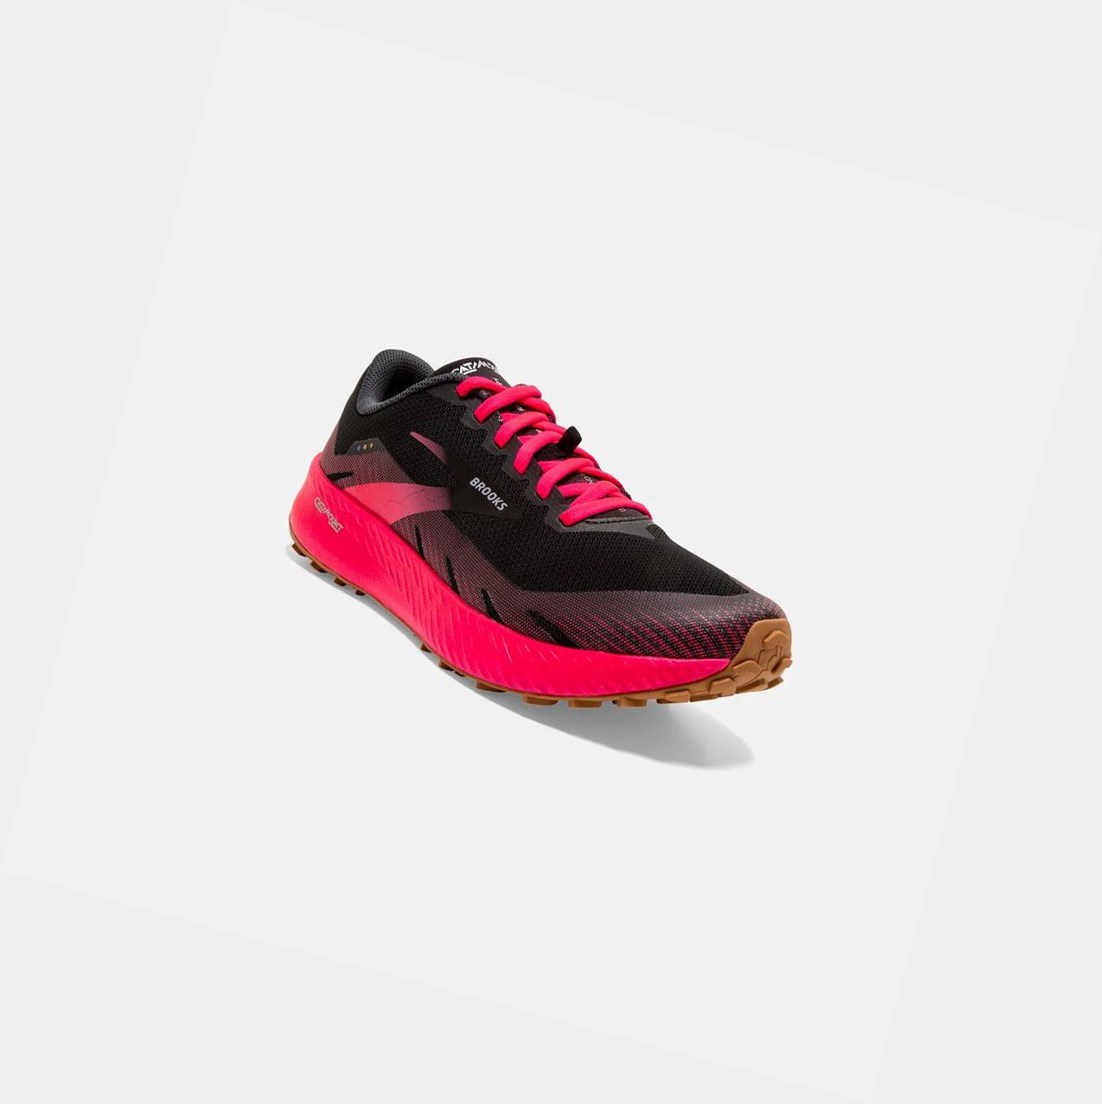 Brooks Catamount Women's Trail Shoes Black / Pink | PUXL-29138